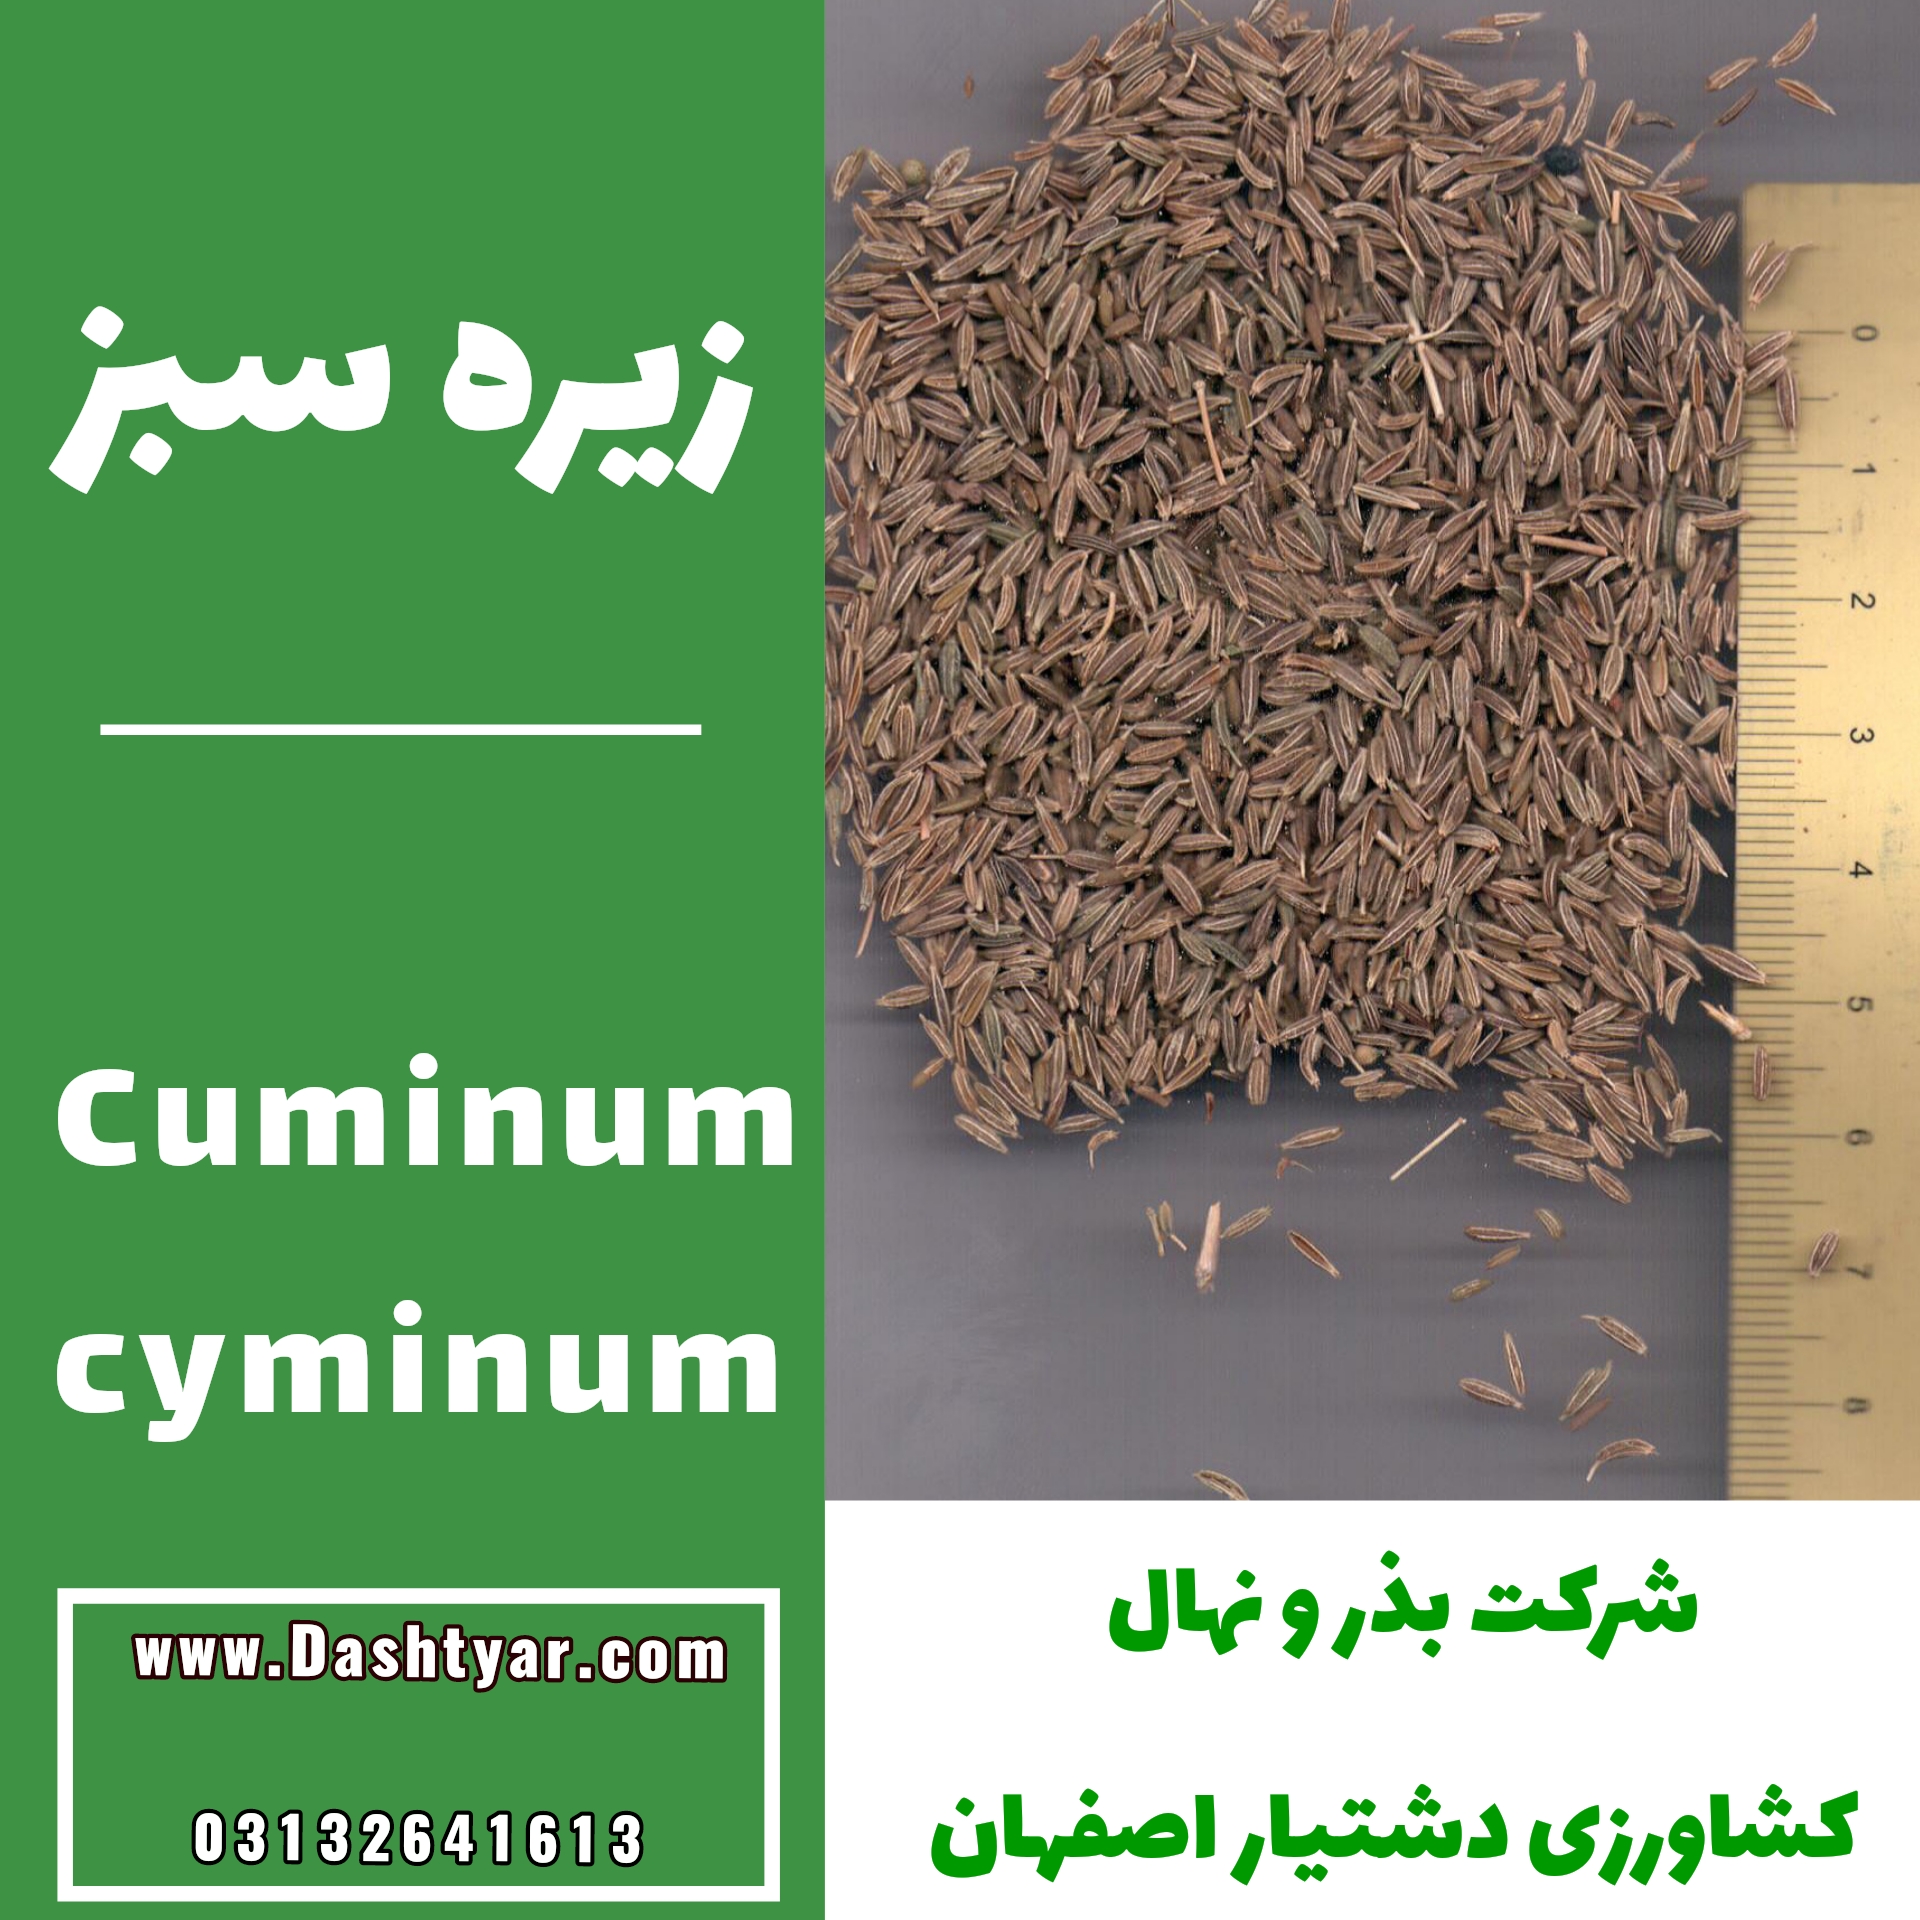 بذر زیره سبز (Cuminum cyminum)